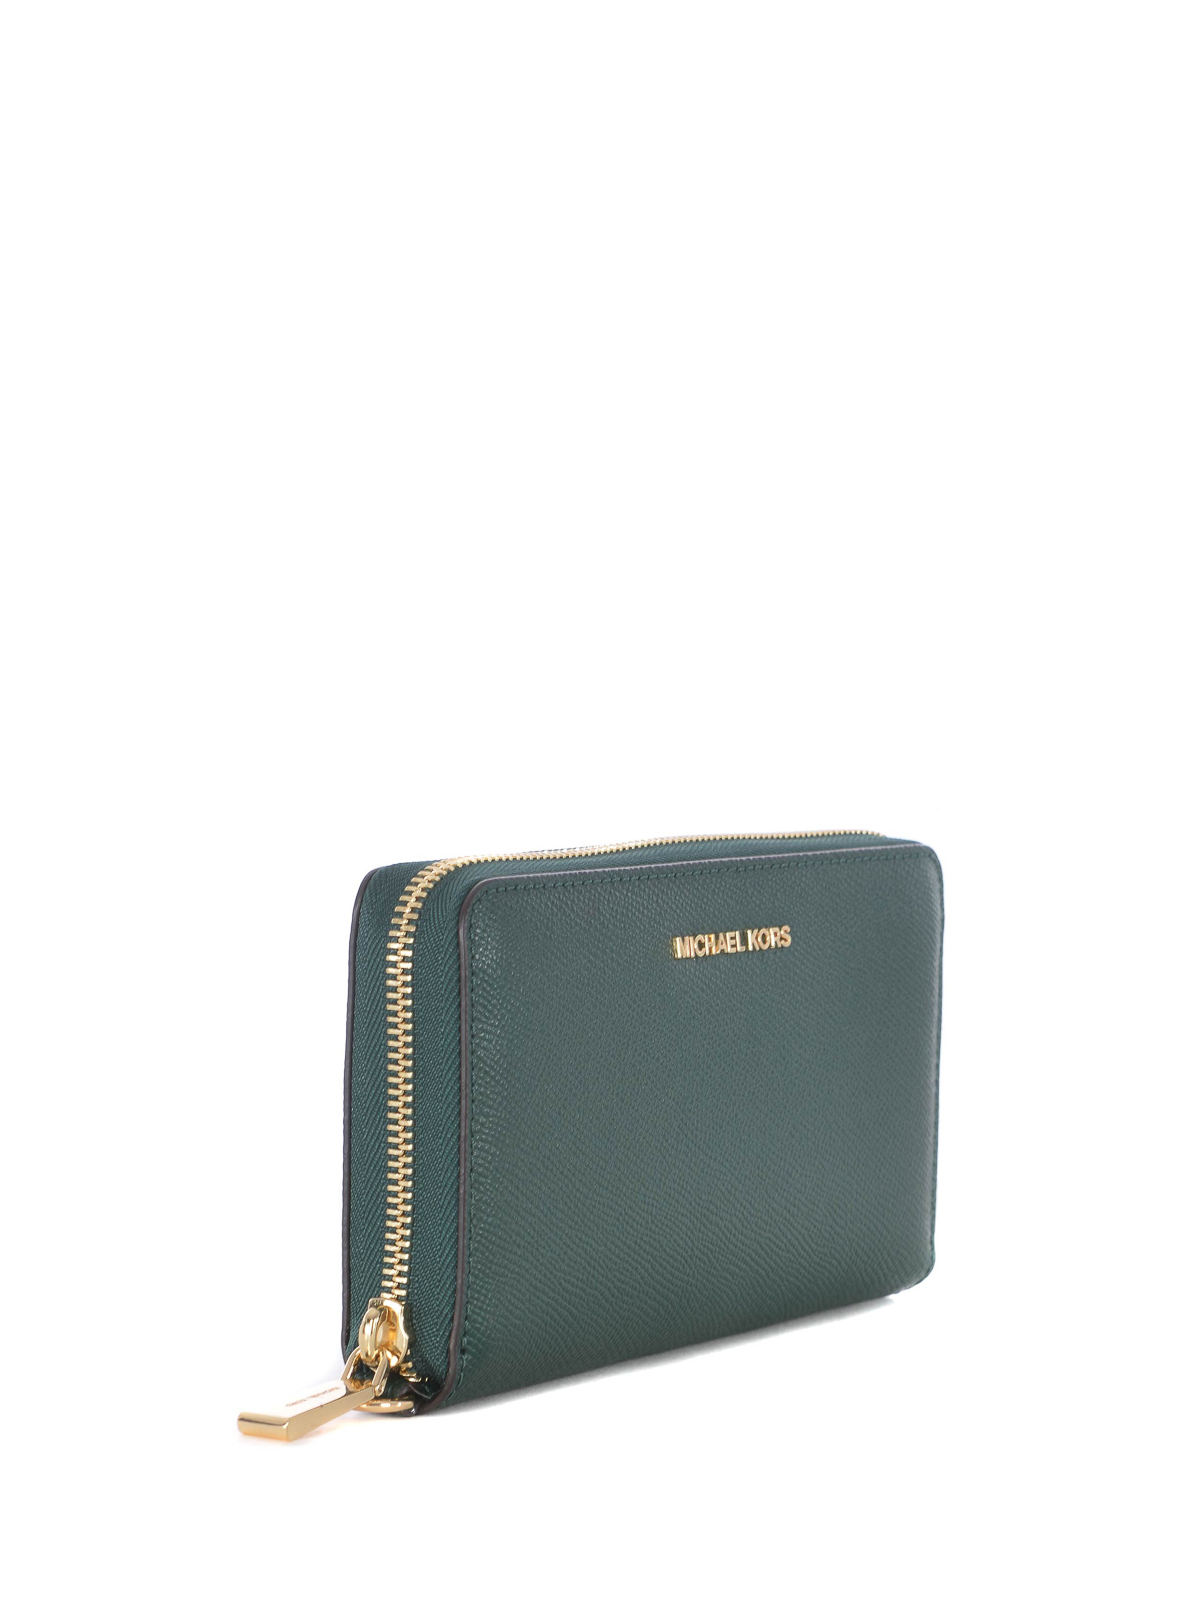 Wallets & purses Michael Kors - Jet Set Travel dark green leather wallet -  32T4GTVE3L305